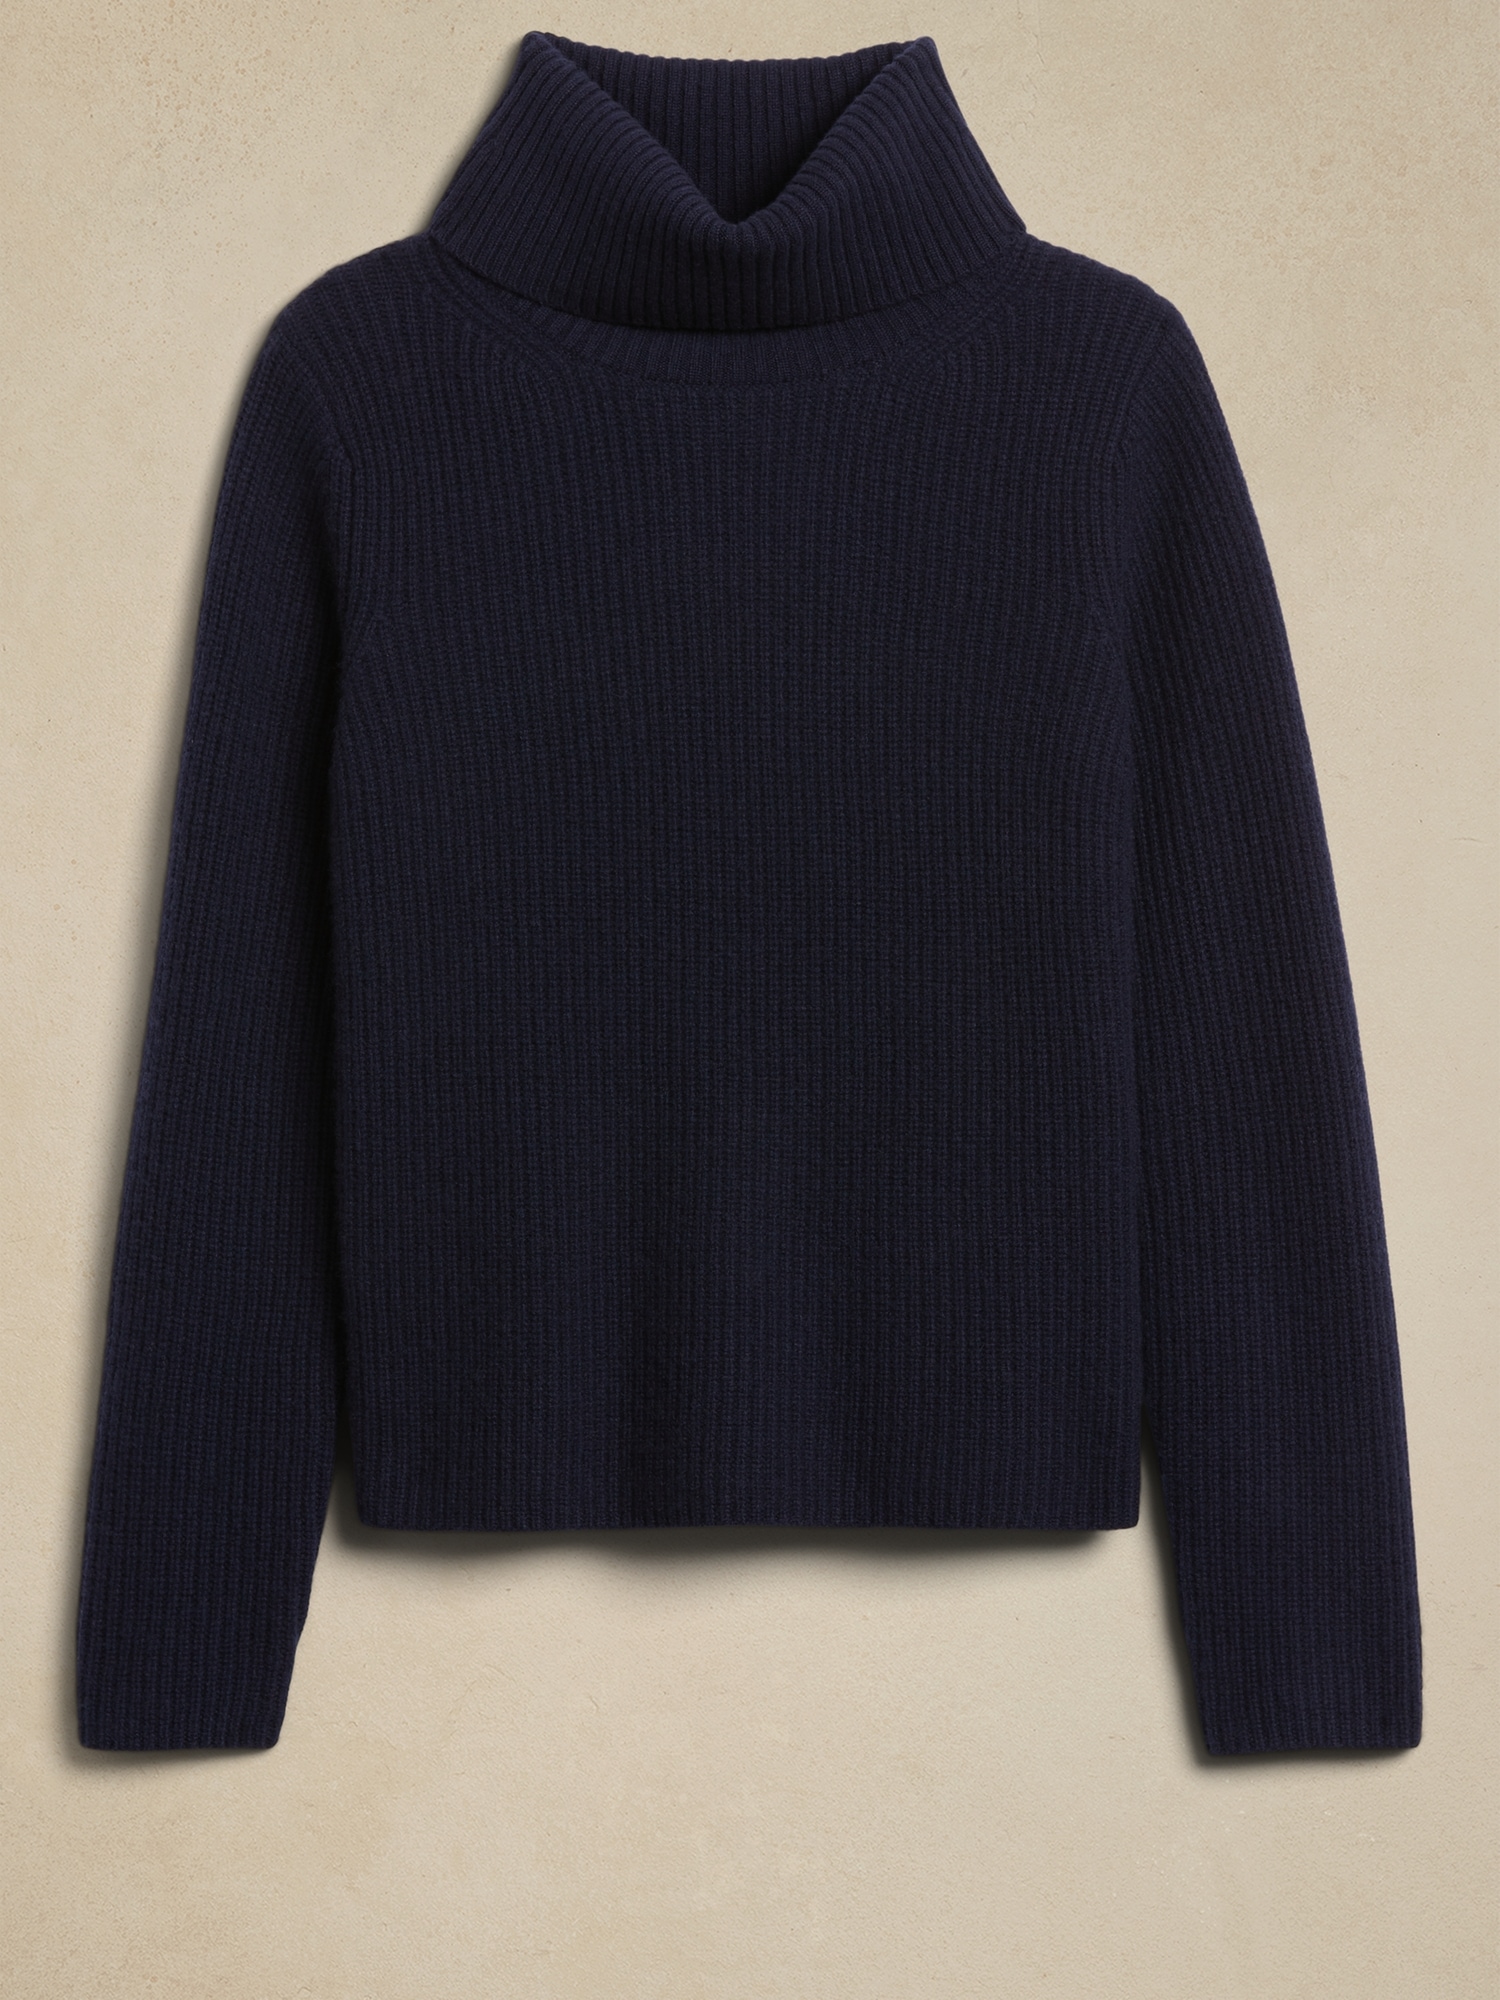 Banana Republic Women's Chiara Cashmere Turtleneck Sweater Navy Blue Size L